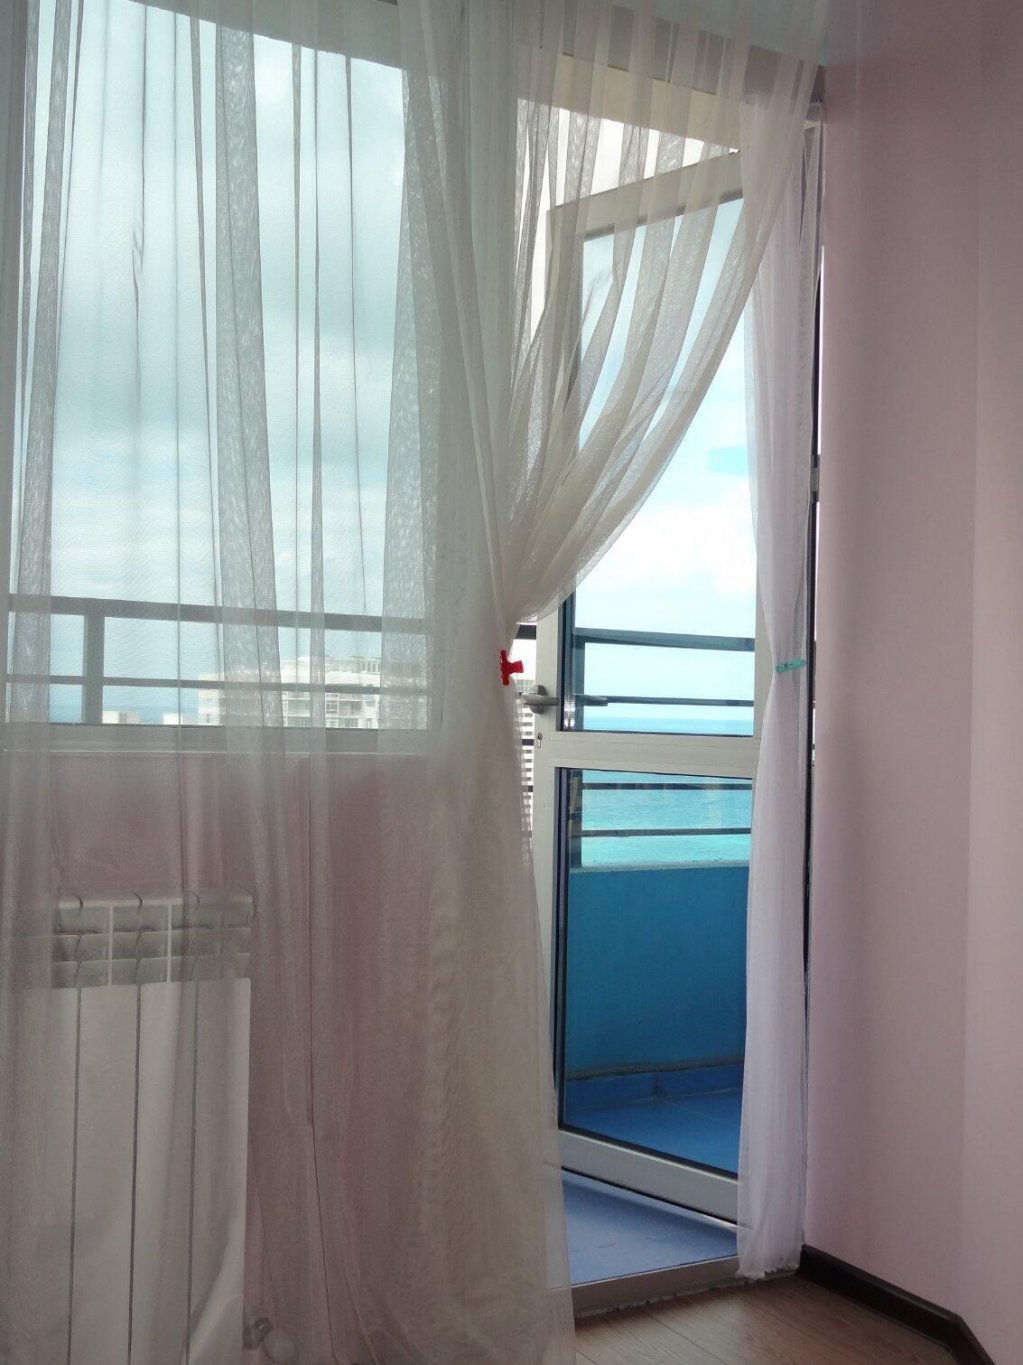 1-bedroom apartment near the sea id-1050 - Batumi Vacation Rentals